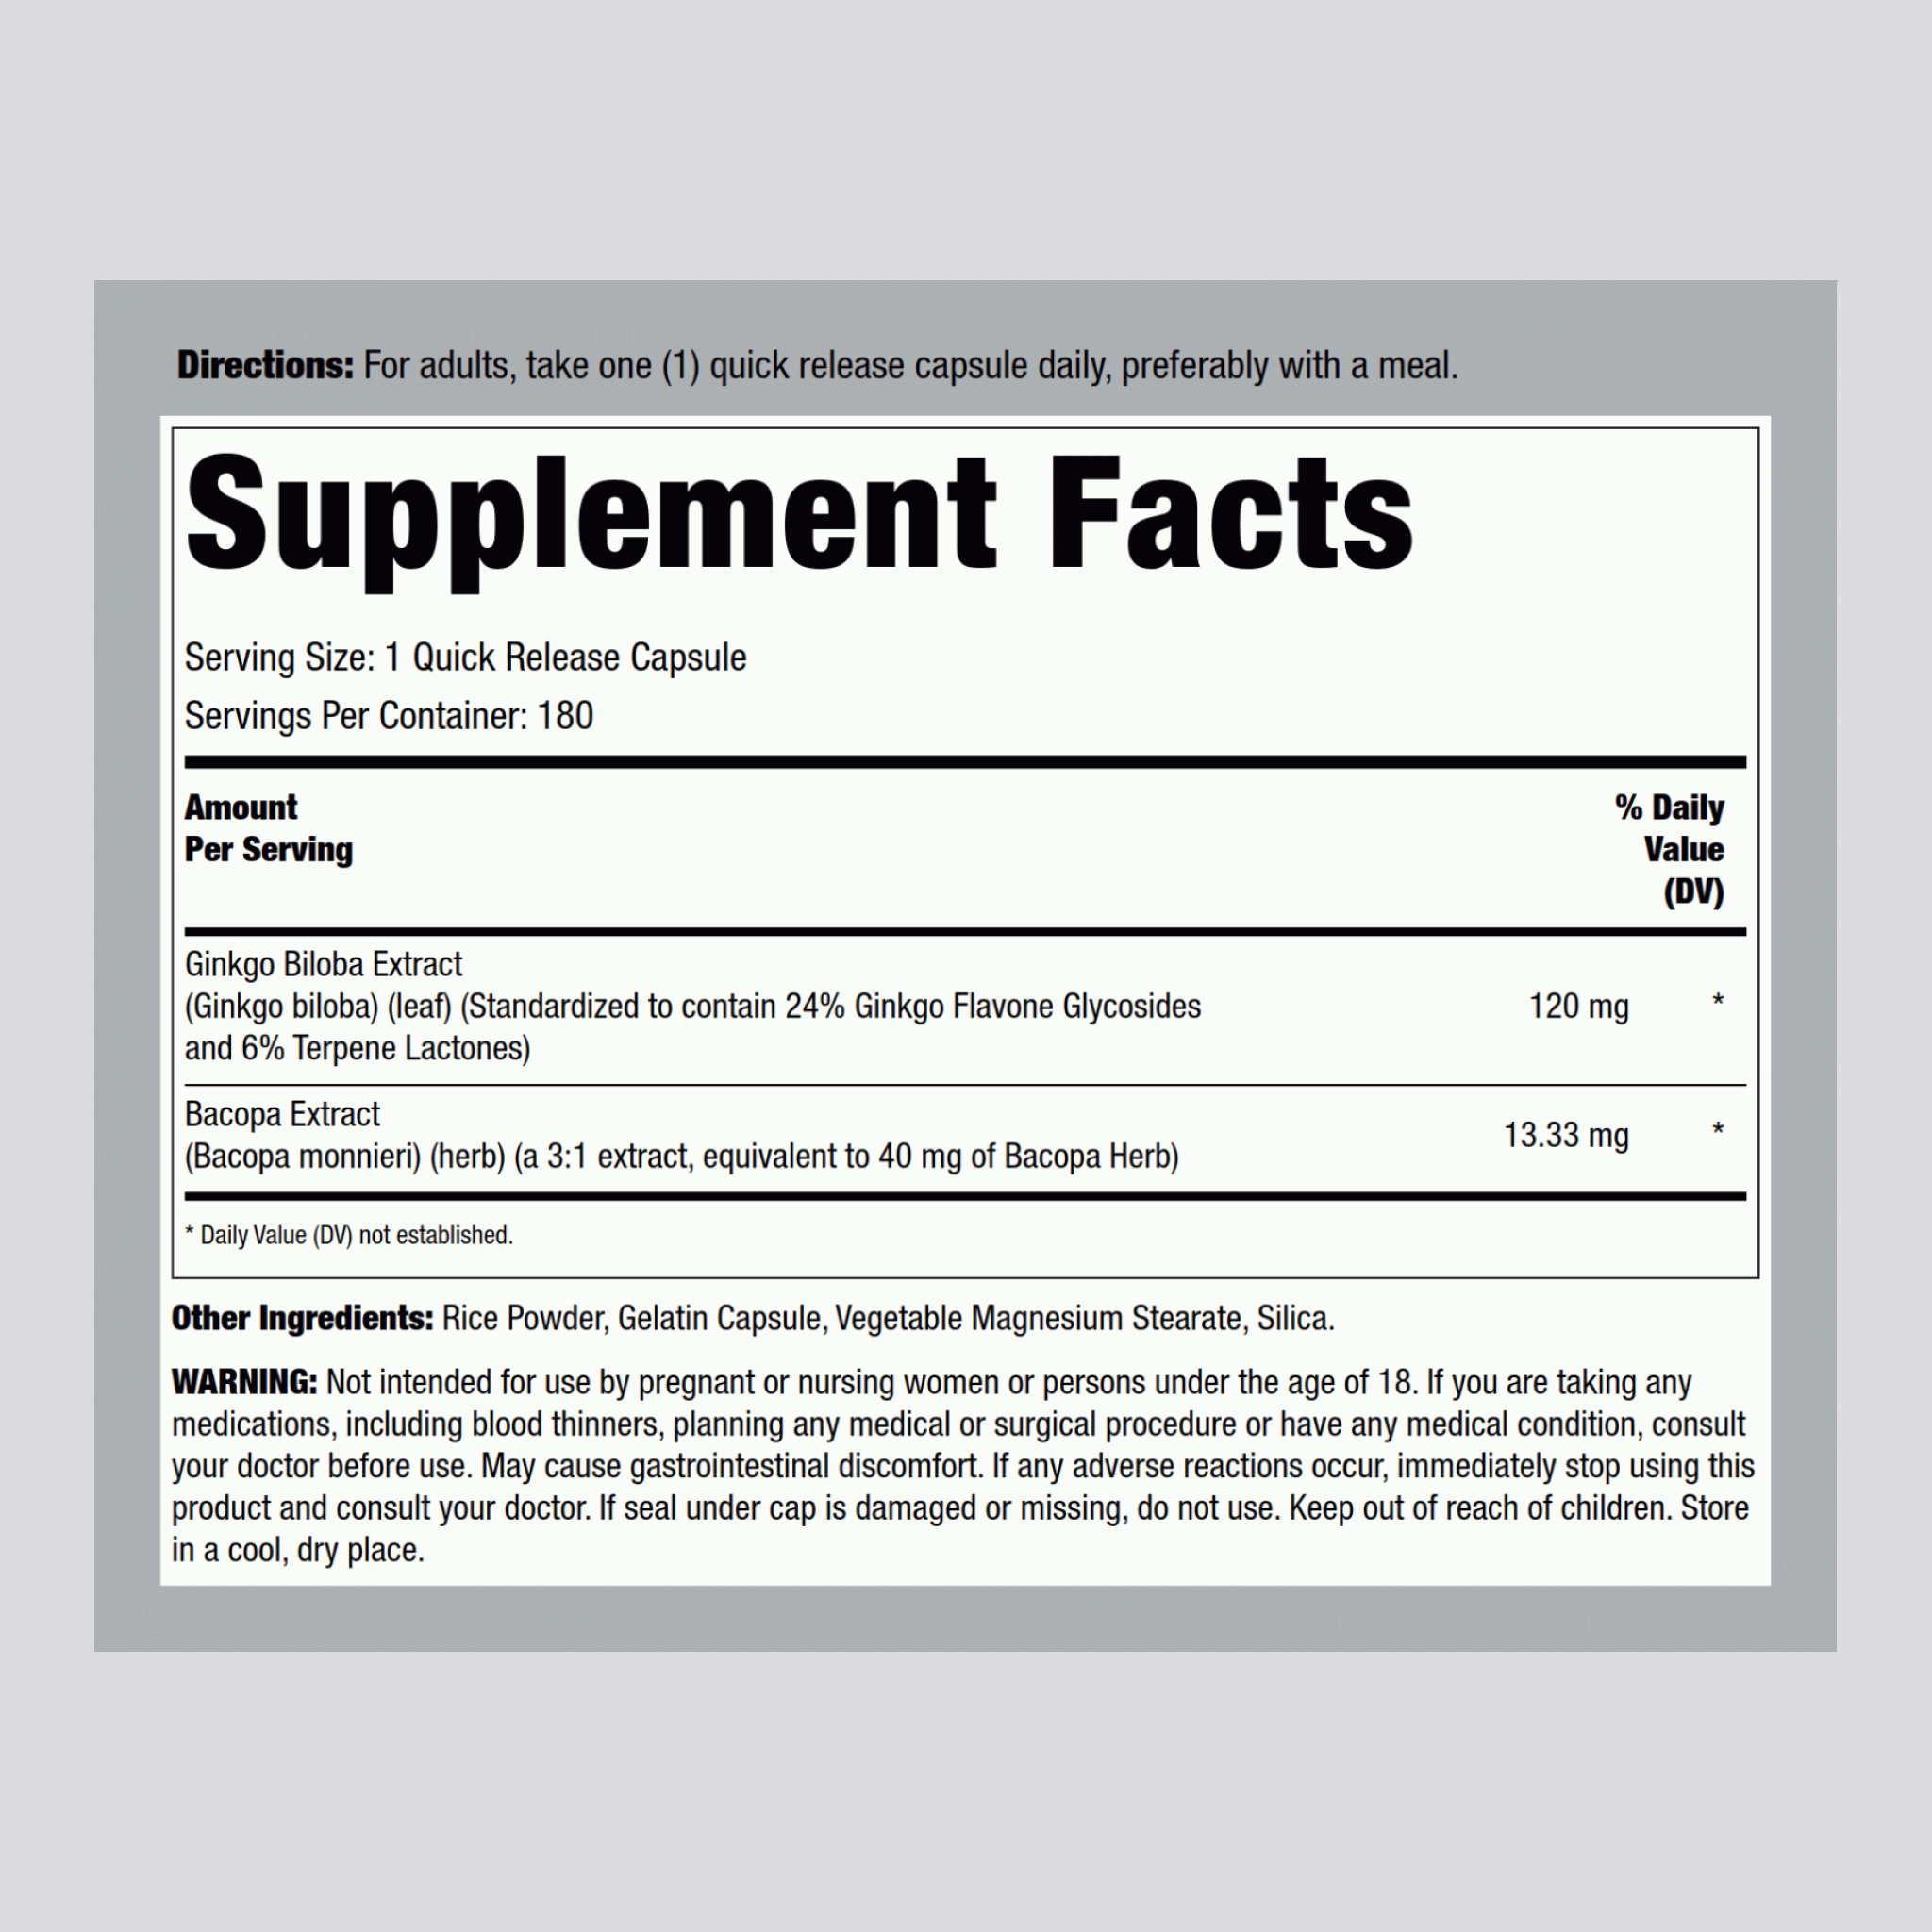 Ginkgo Biloba Standardized Extract, 120 mg, 180 Capsules